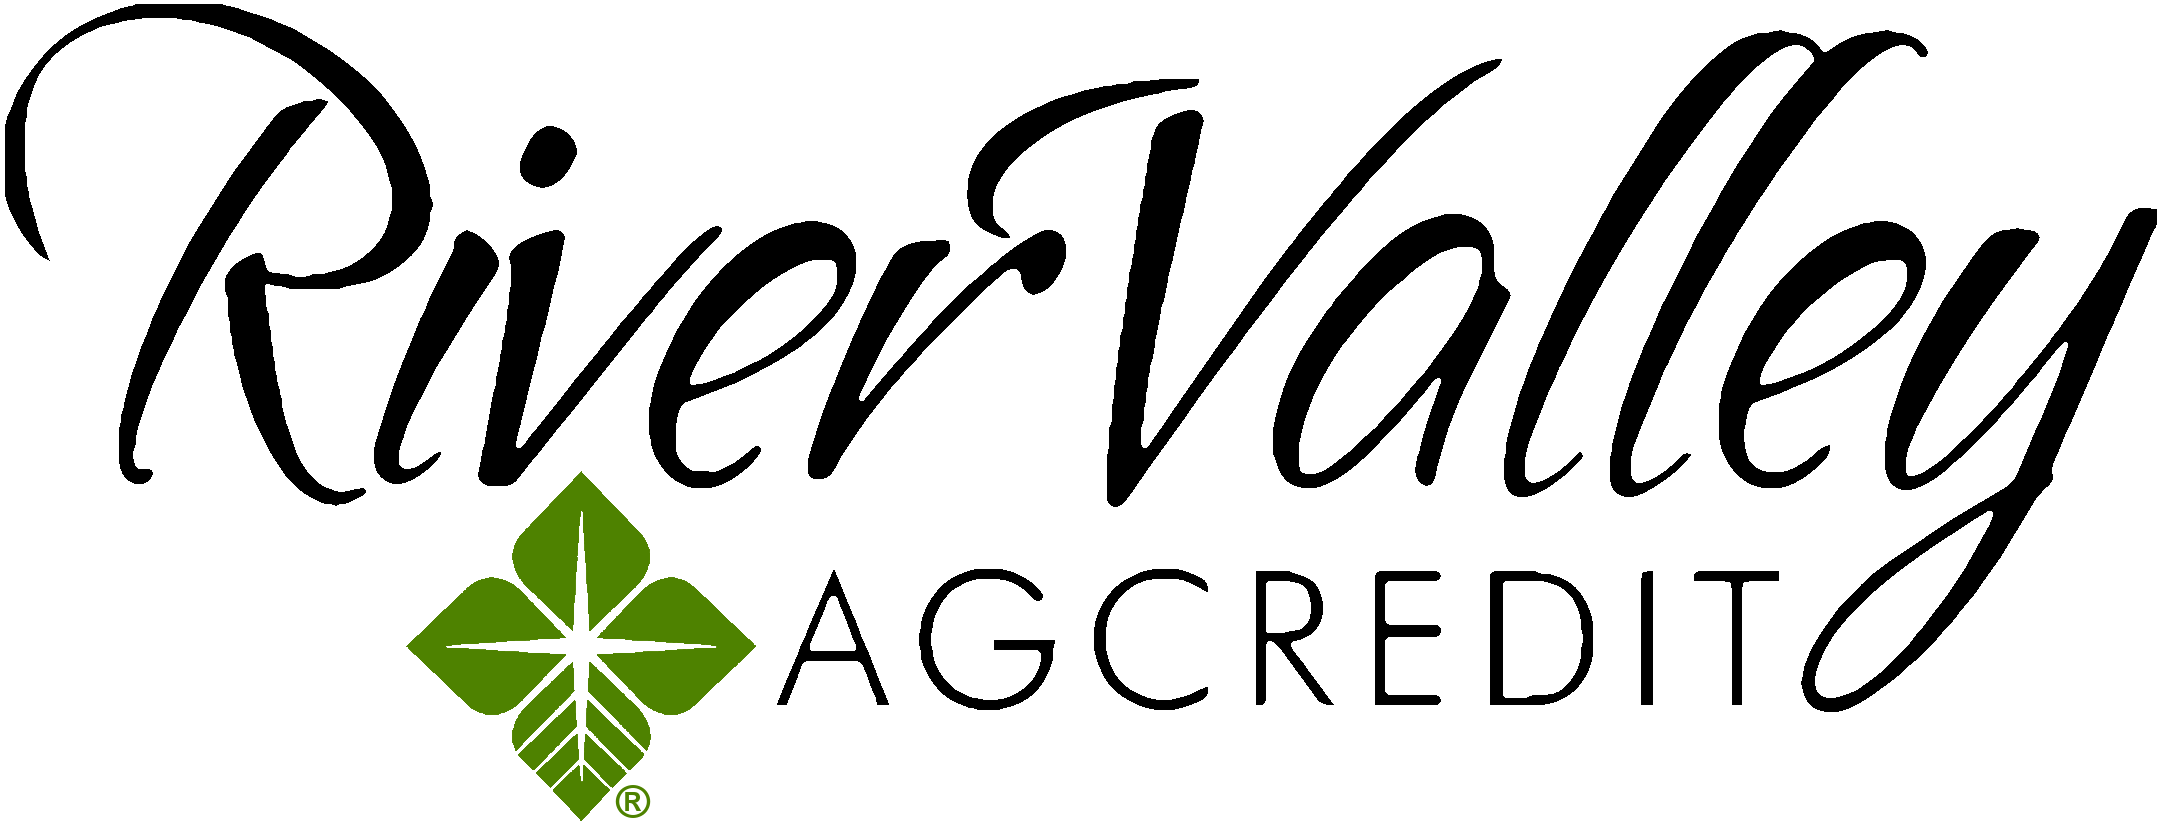 credit-logo